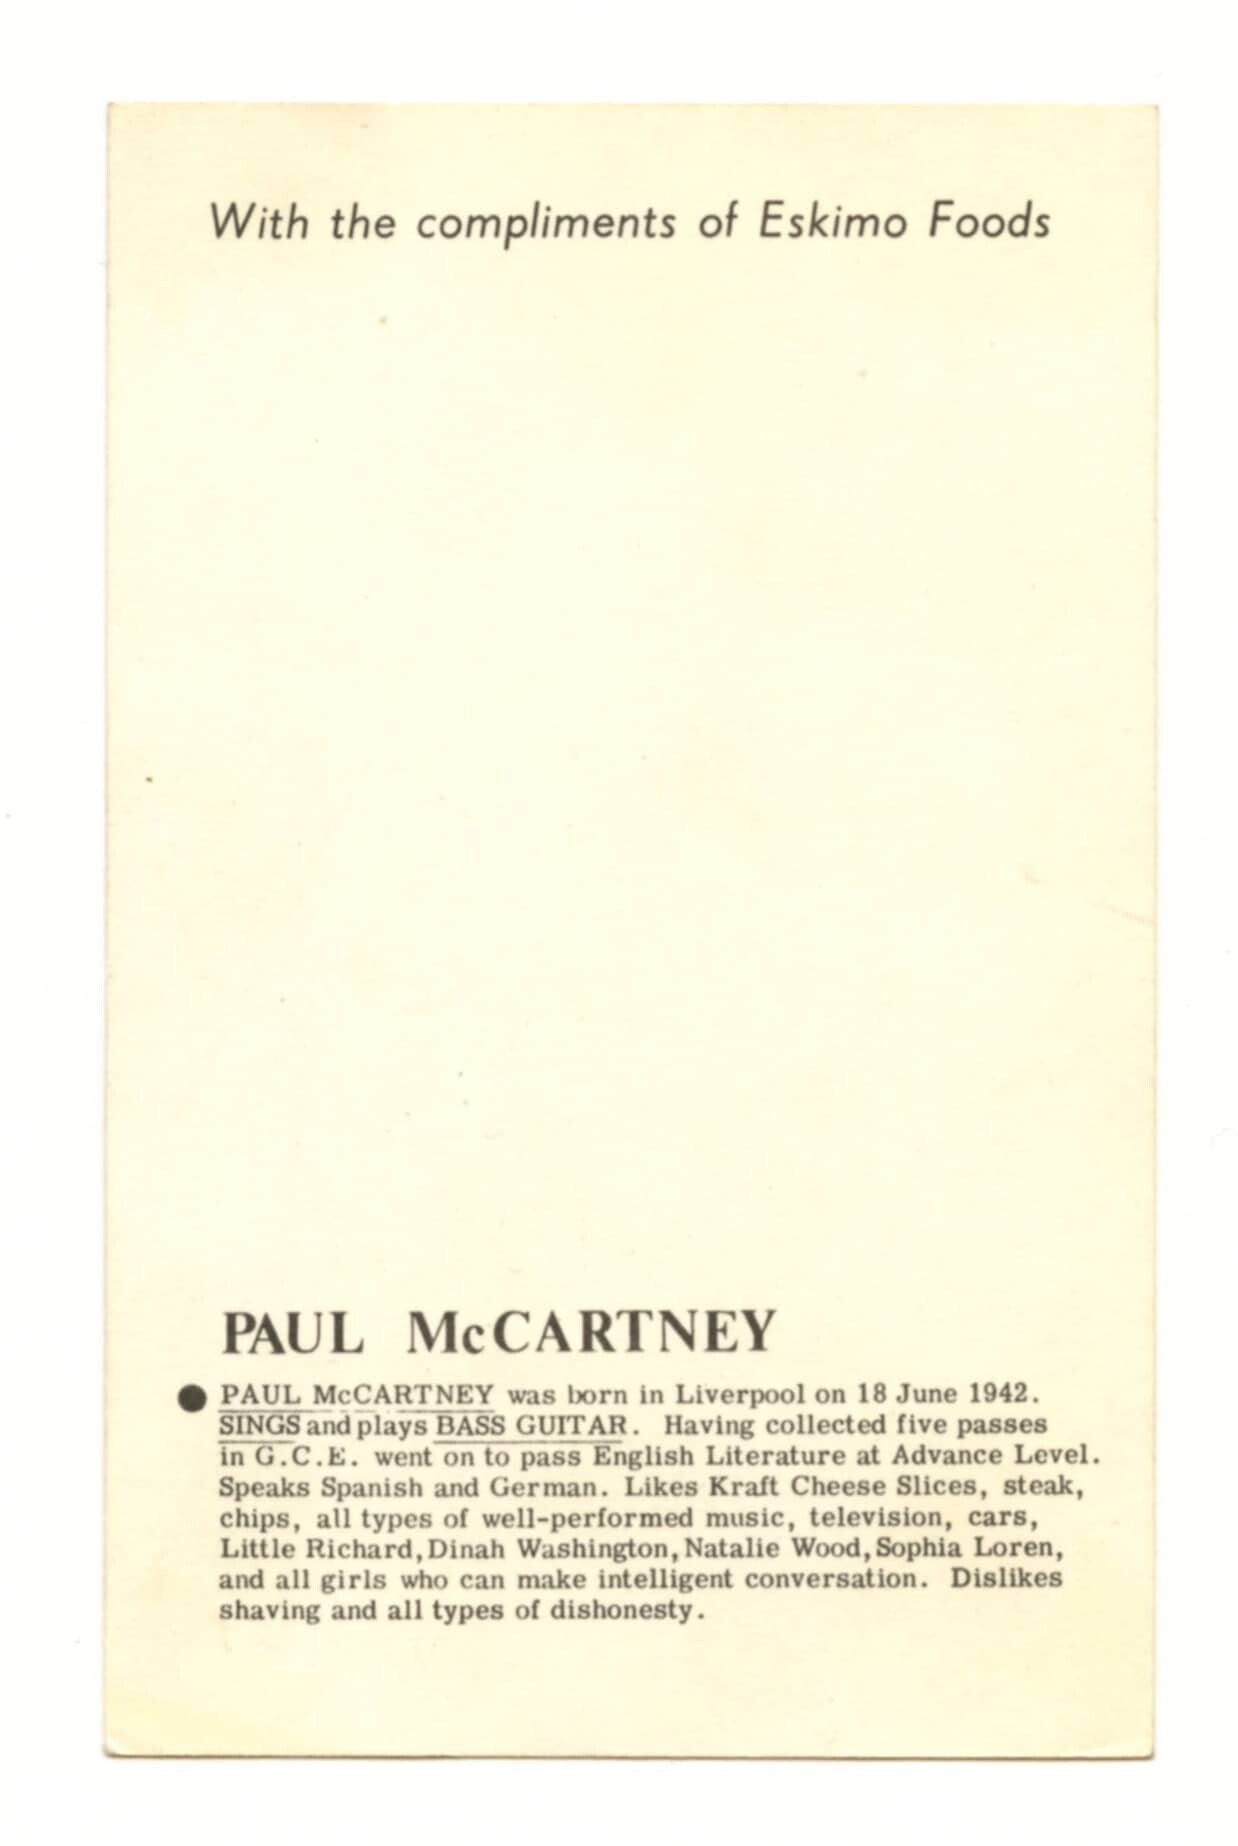 Paul McCartney Eskimo Foods Compliments Postcard 1960s